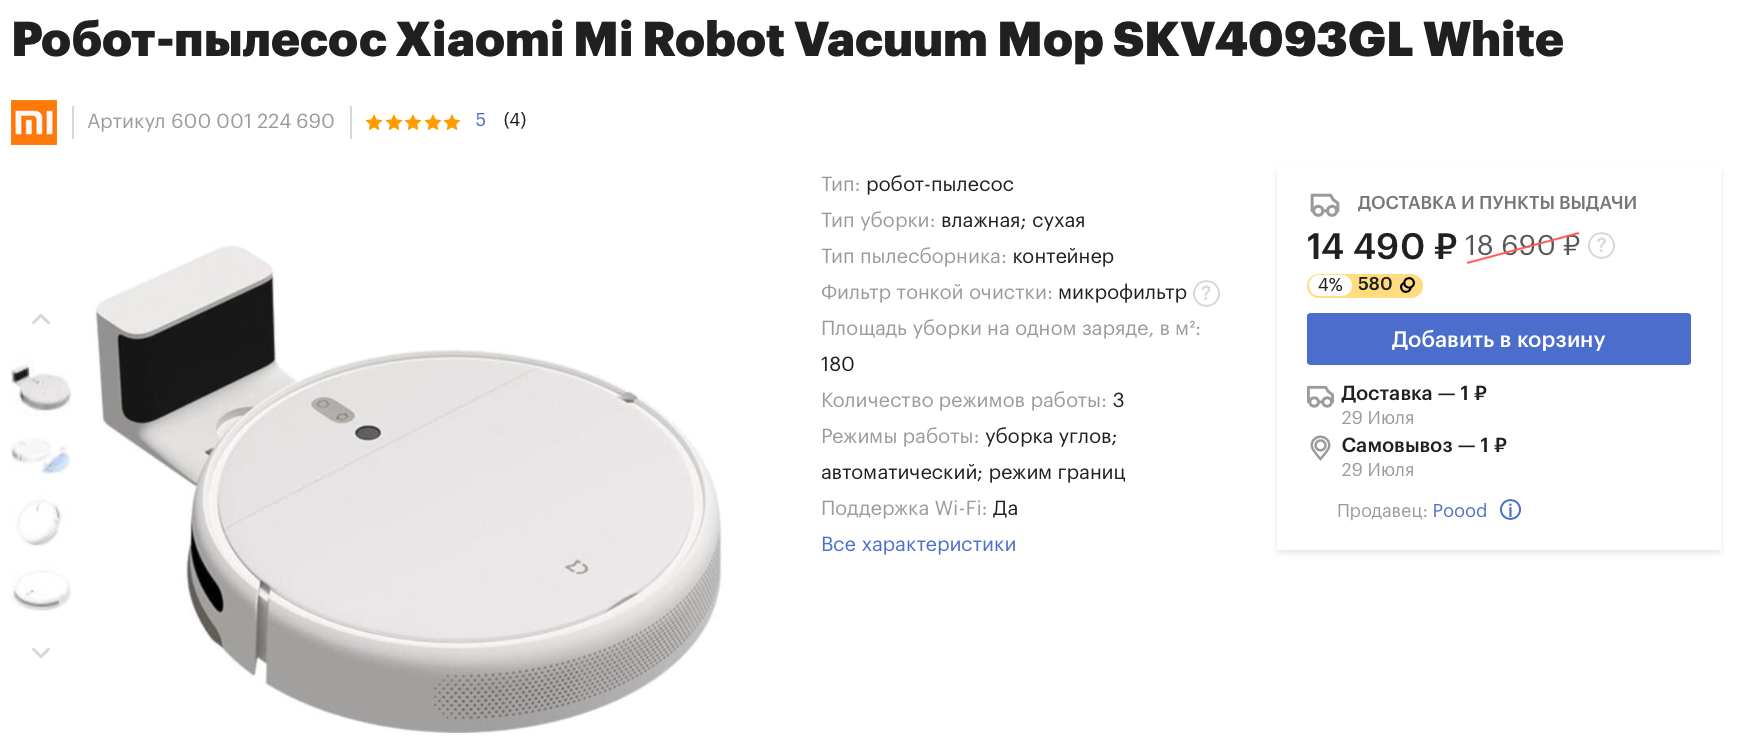 Mi vacuum mop озвучки. Робот-пылесос mi Robot Vacuum-Mop skv4093gl. Пылесос Xiaomi Robot Vacuum e12. Робот-пылесос Xiaomi mi Robot Vacuum-Mop skv4093gl, цвет белый. Пылесос Xiaomi un 3481.